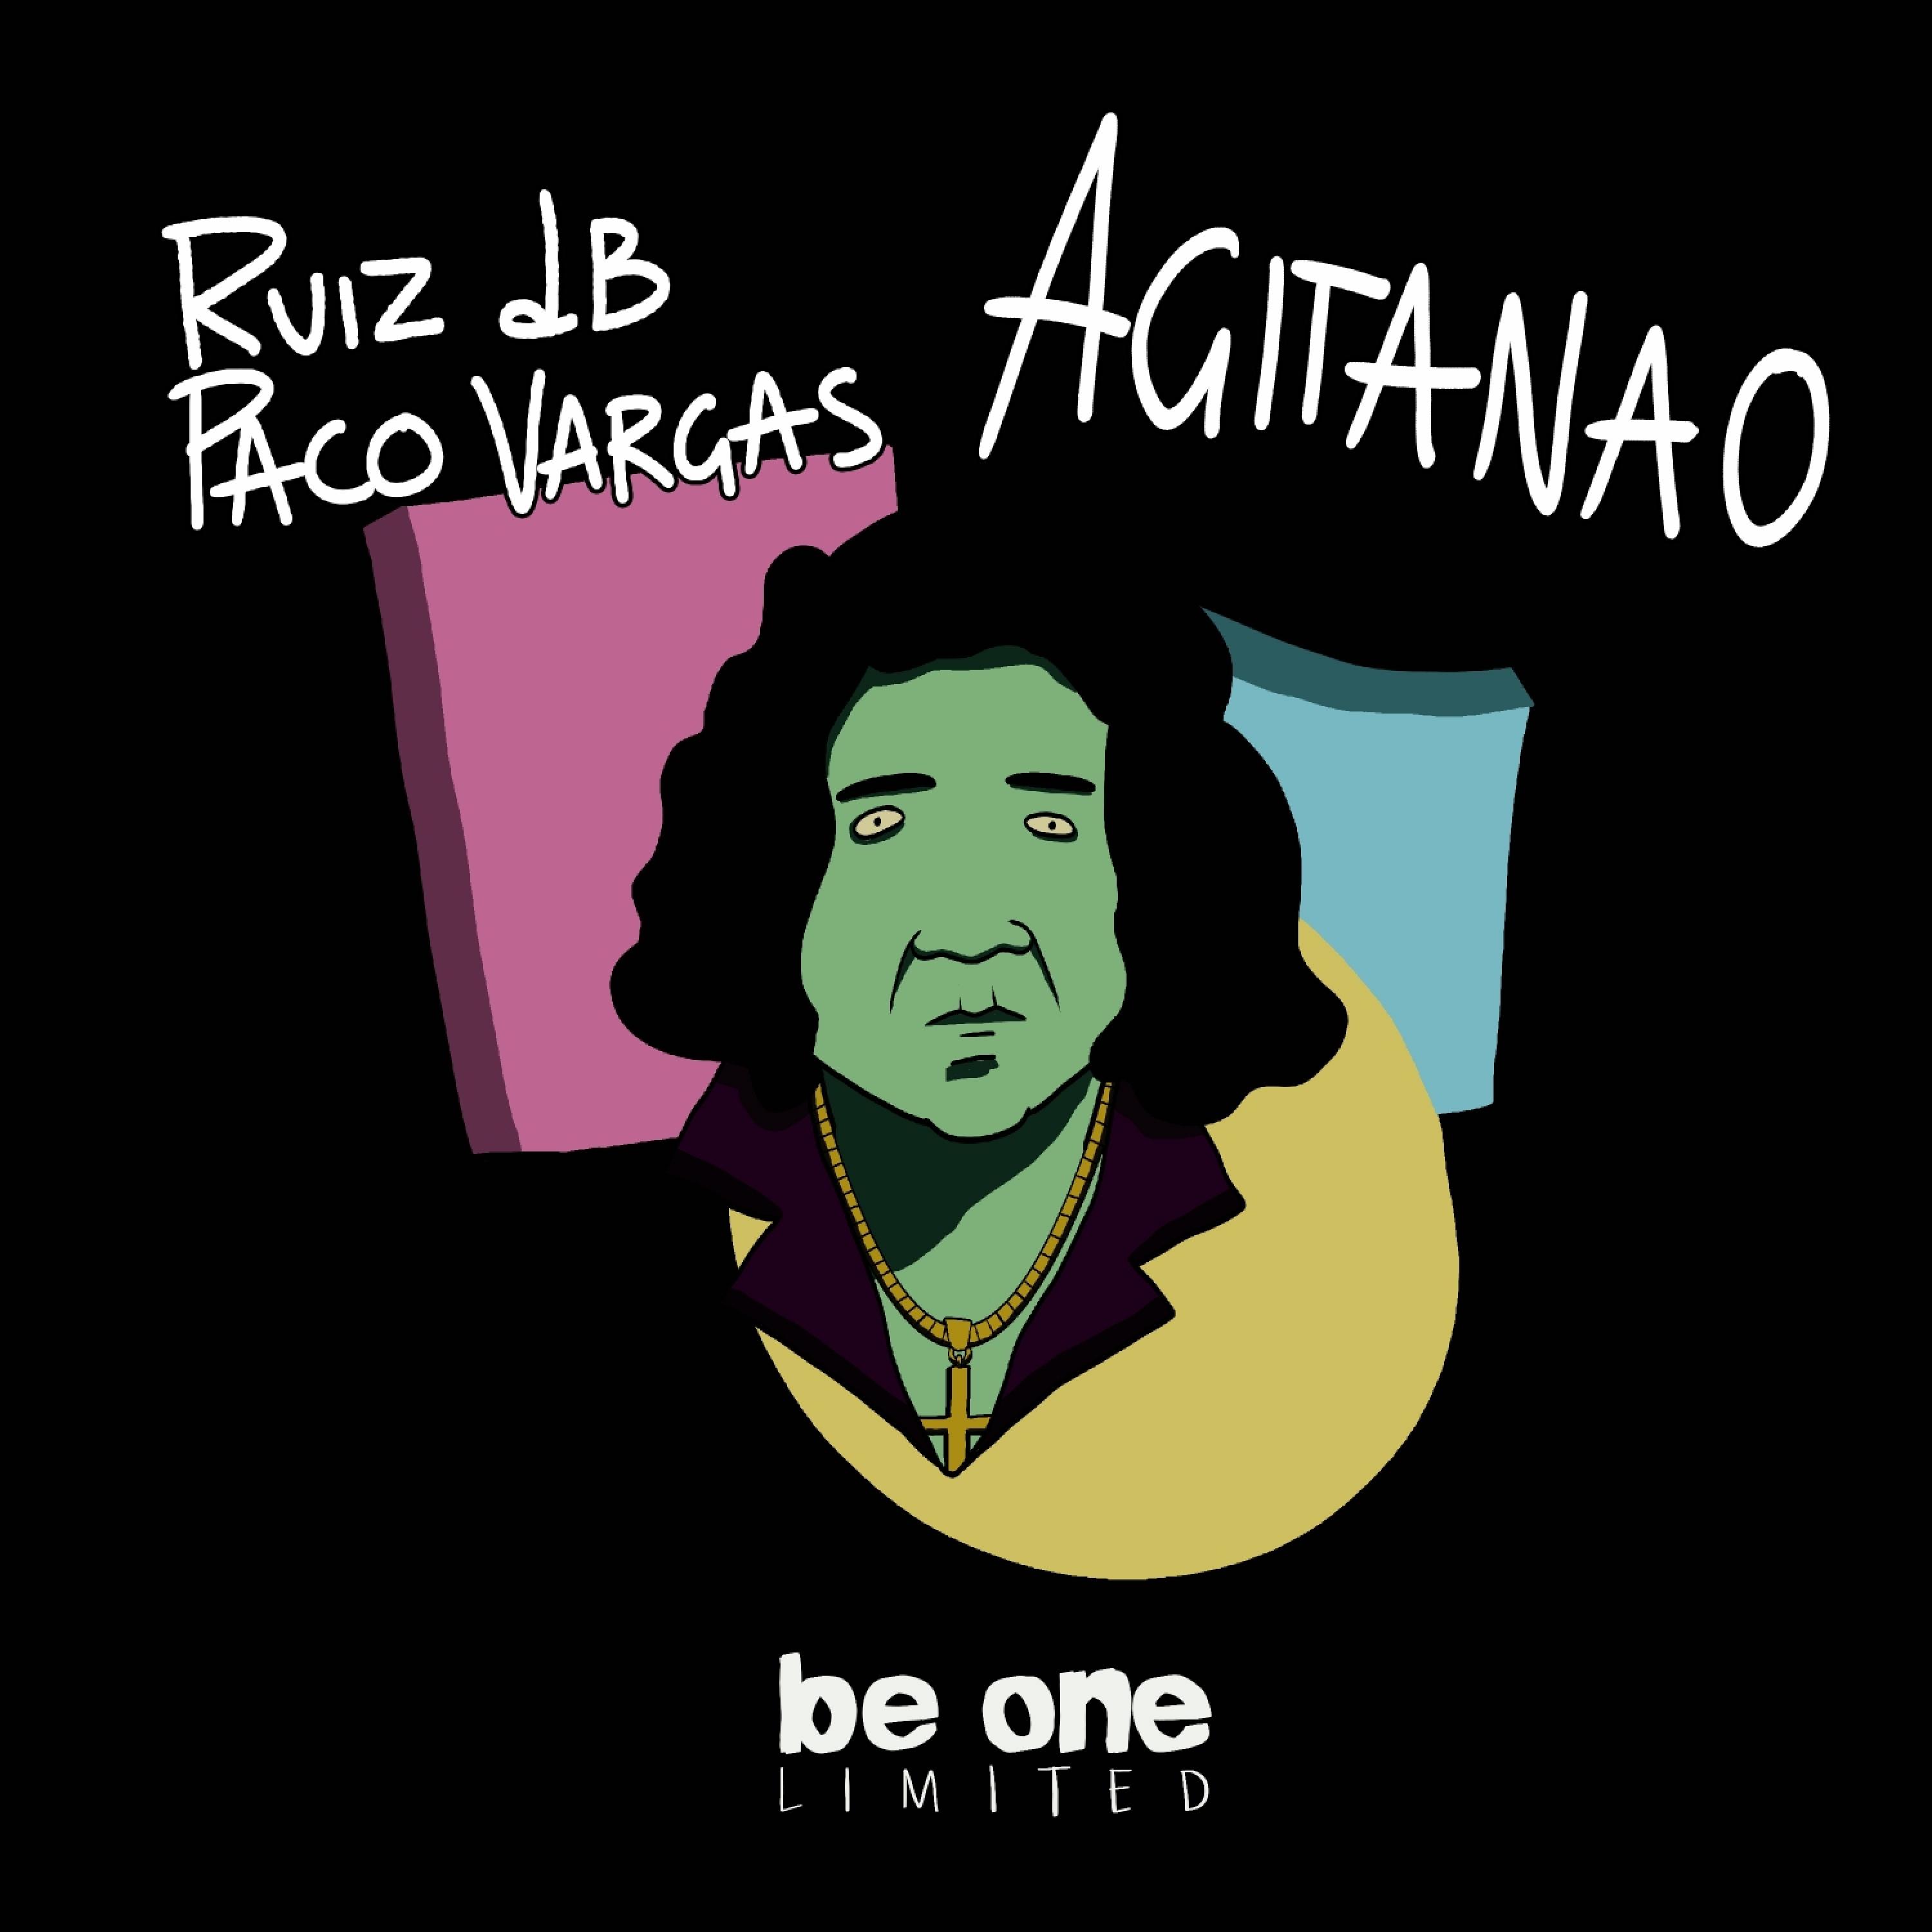 Ruiz dB - Bicomponentes (Original Mix)